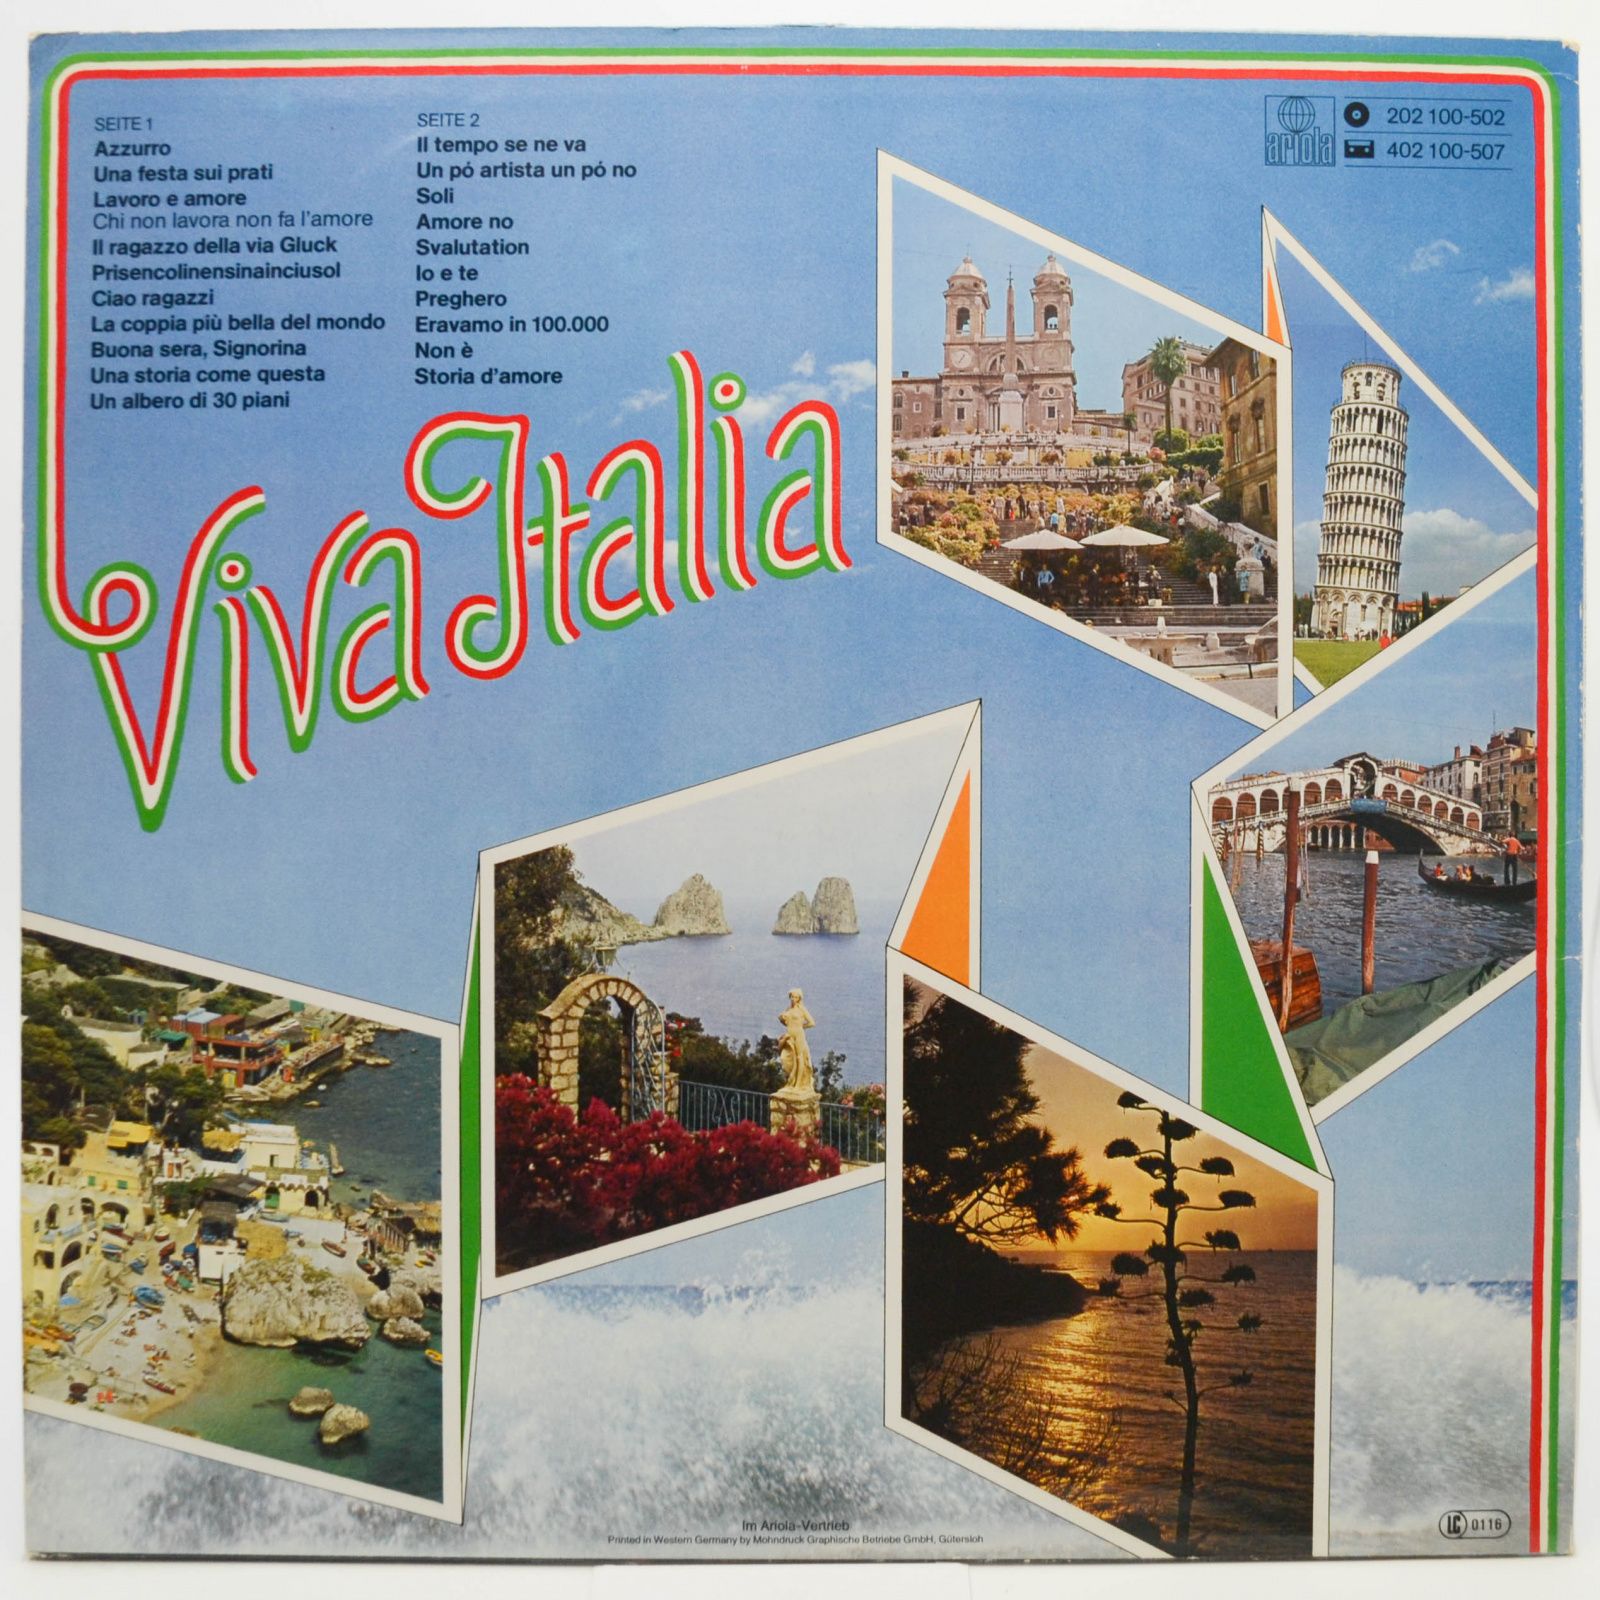 Adriano Celentano — Viva Italia (20 Super Songs), 1980